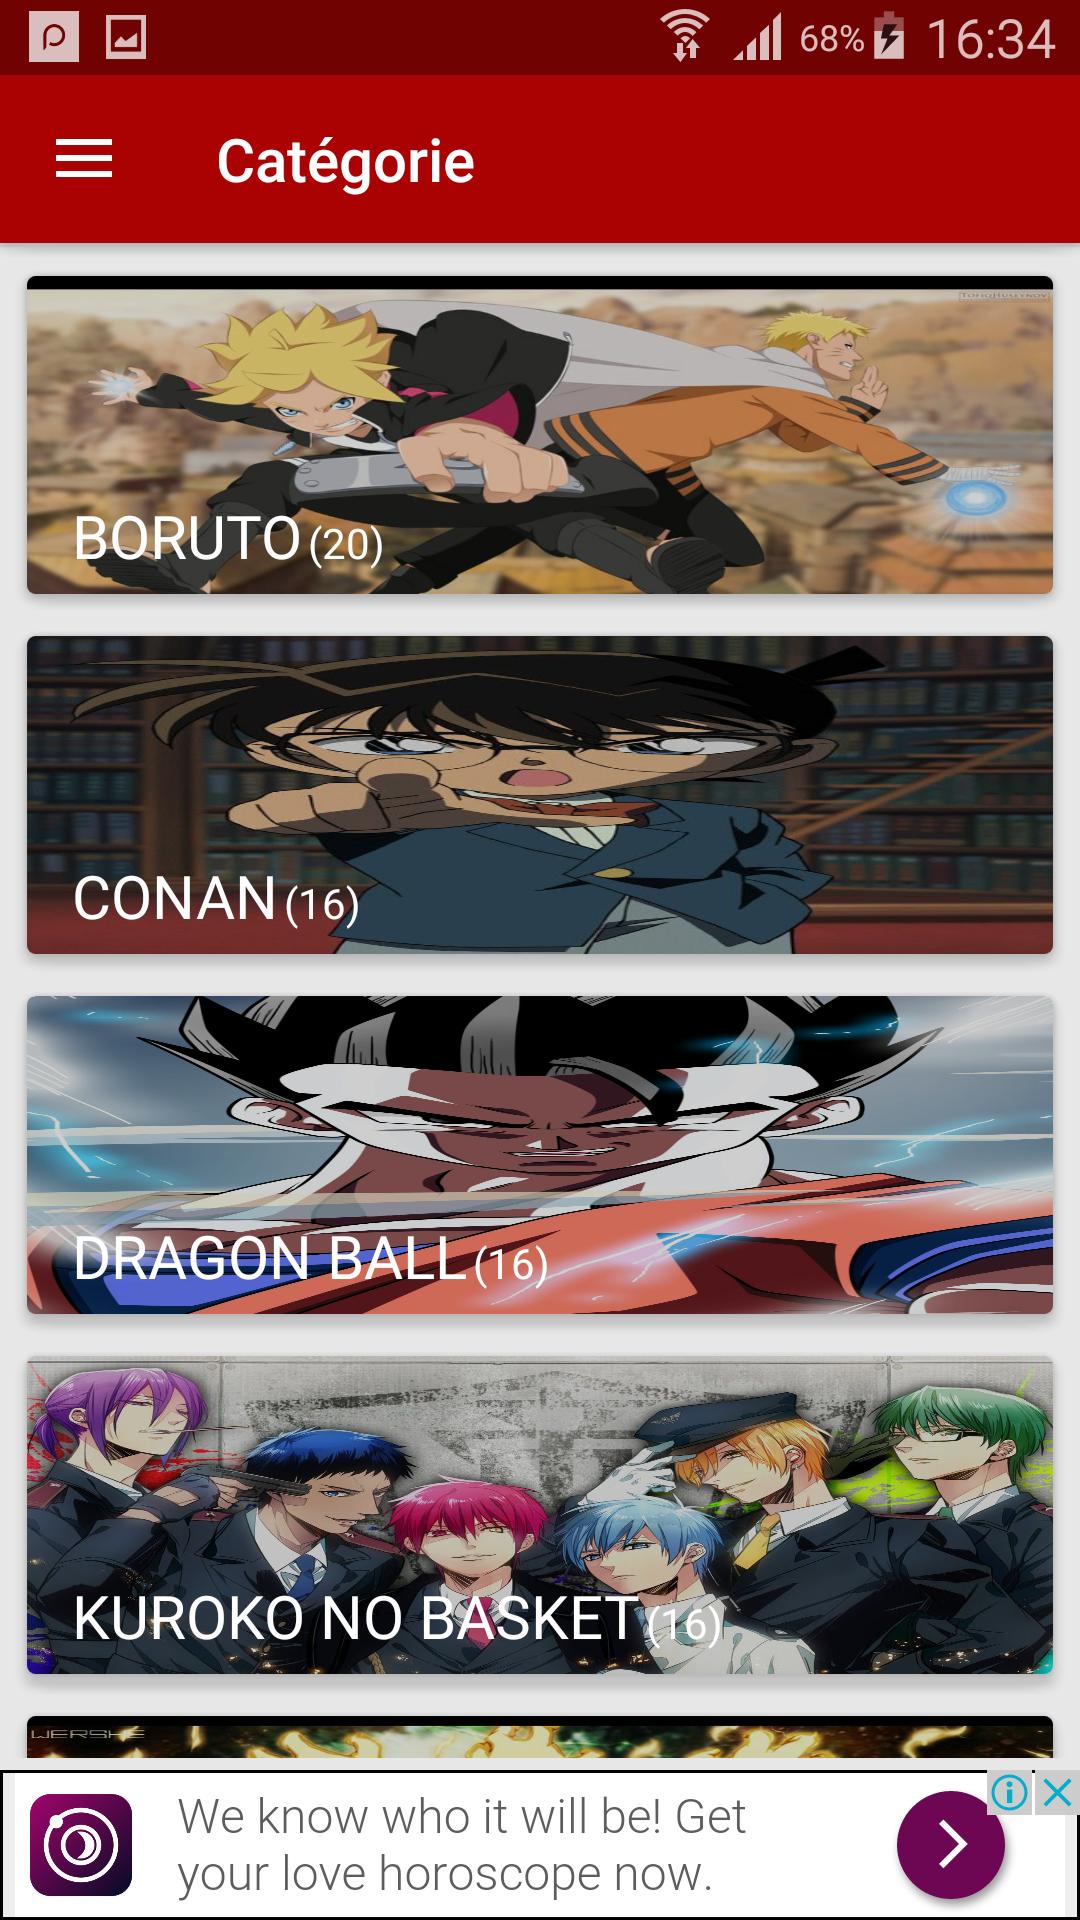 Top Anime GIFs APK untuk Unduhan Android